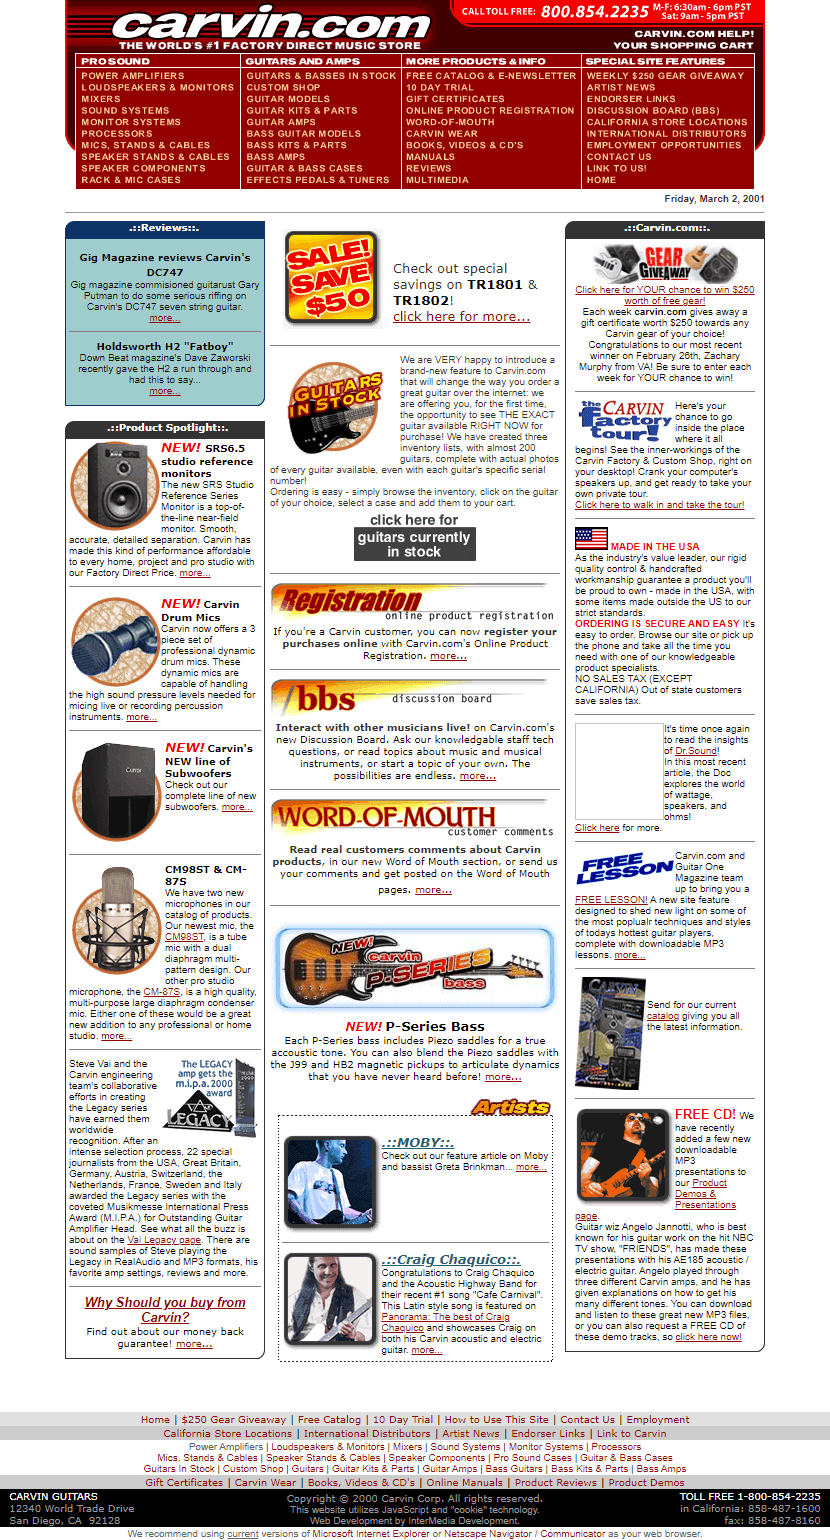 Carvin Guitars website in 2001